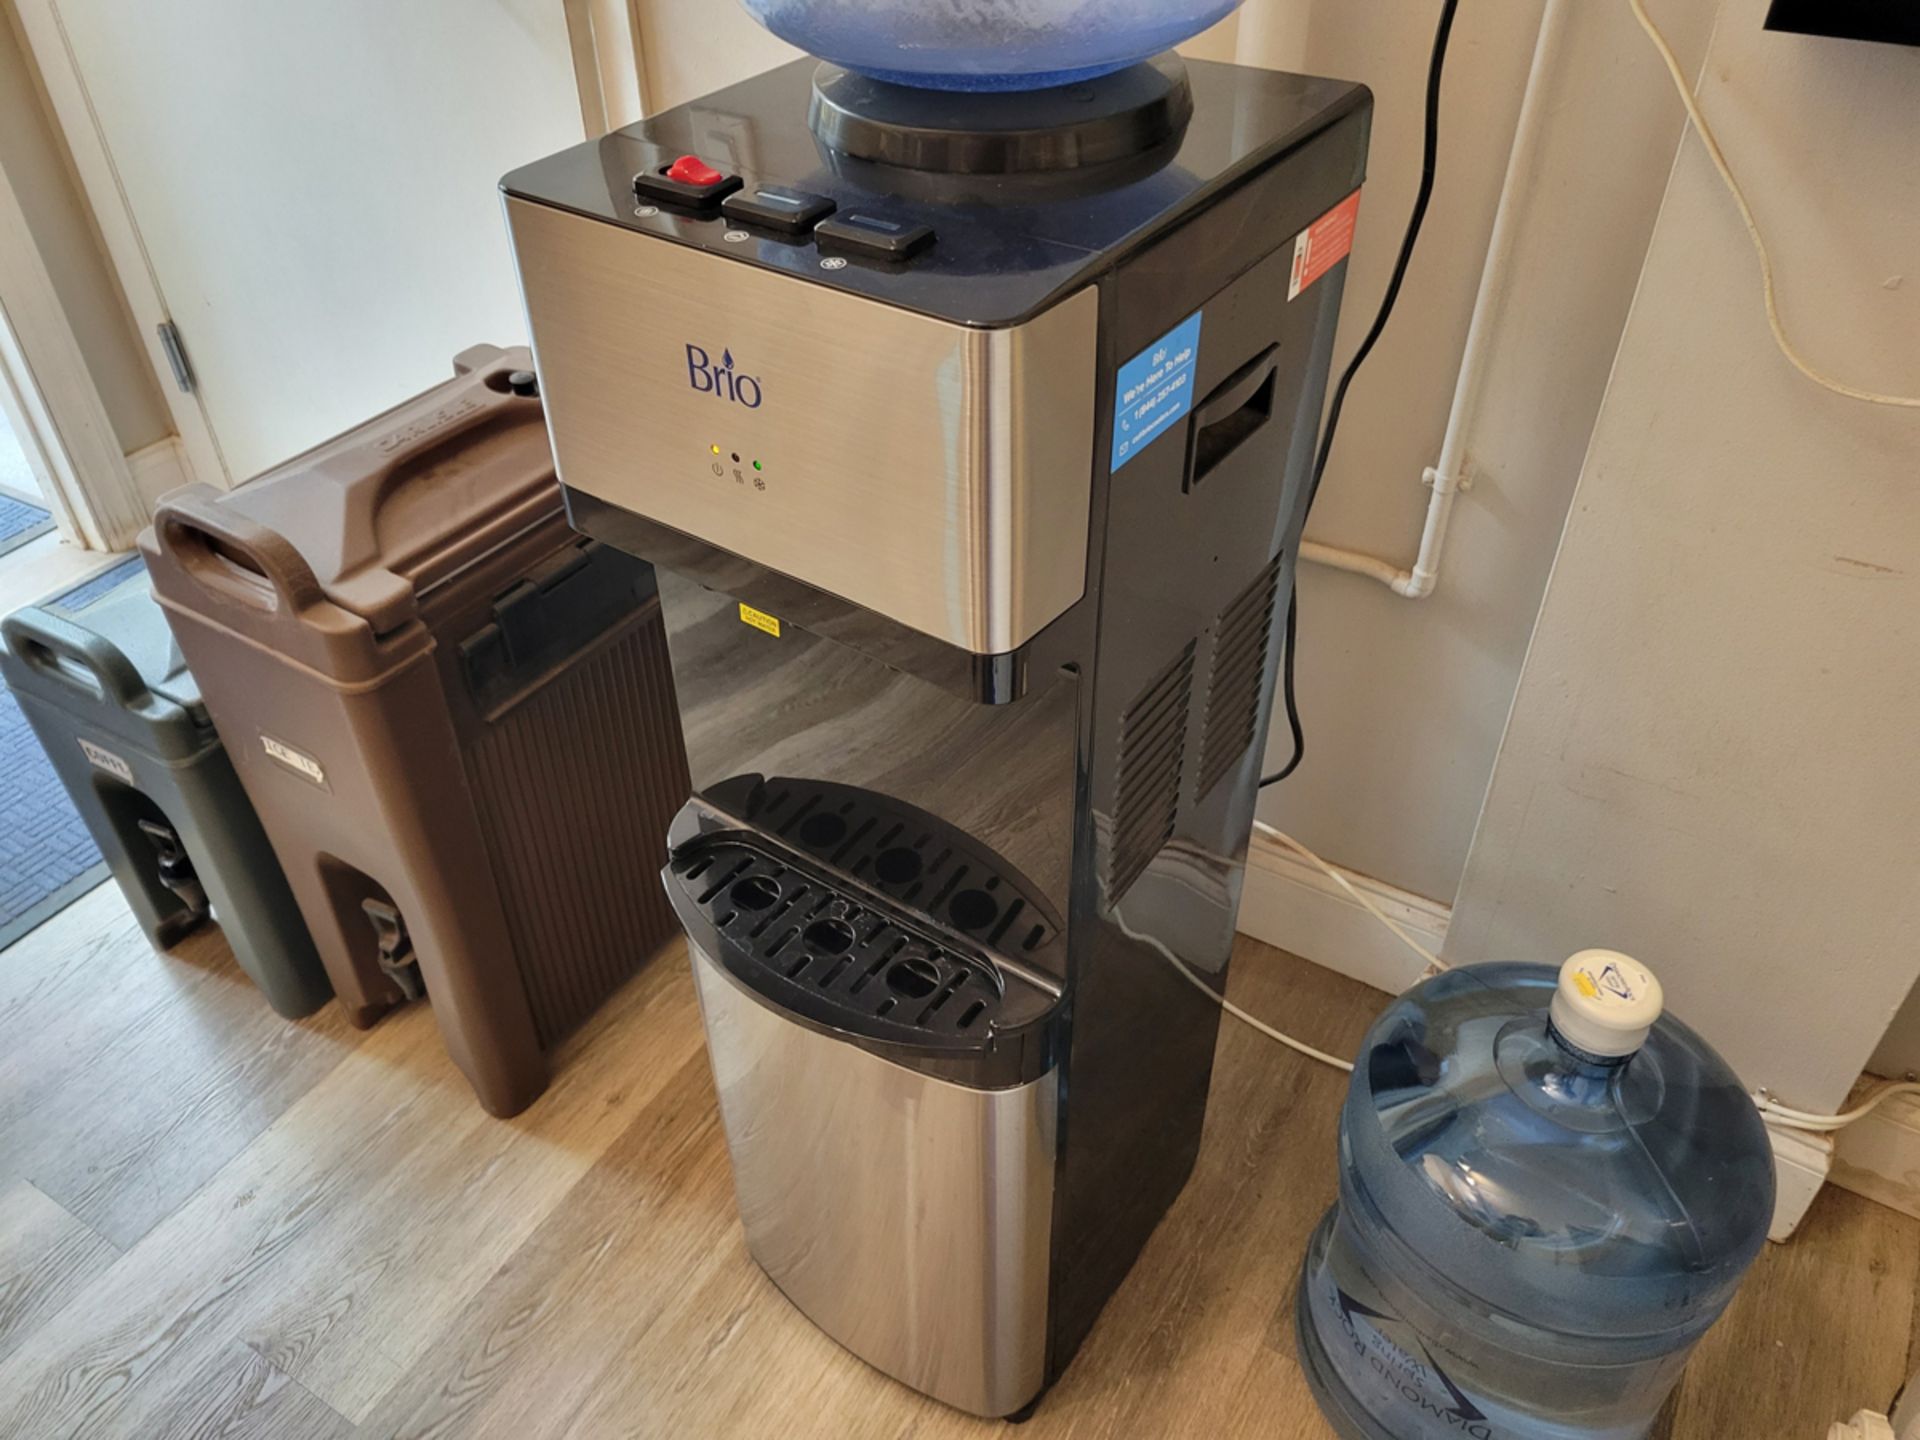 Brio Model CLTL520 Water Dispenser - Image 2 of 5